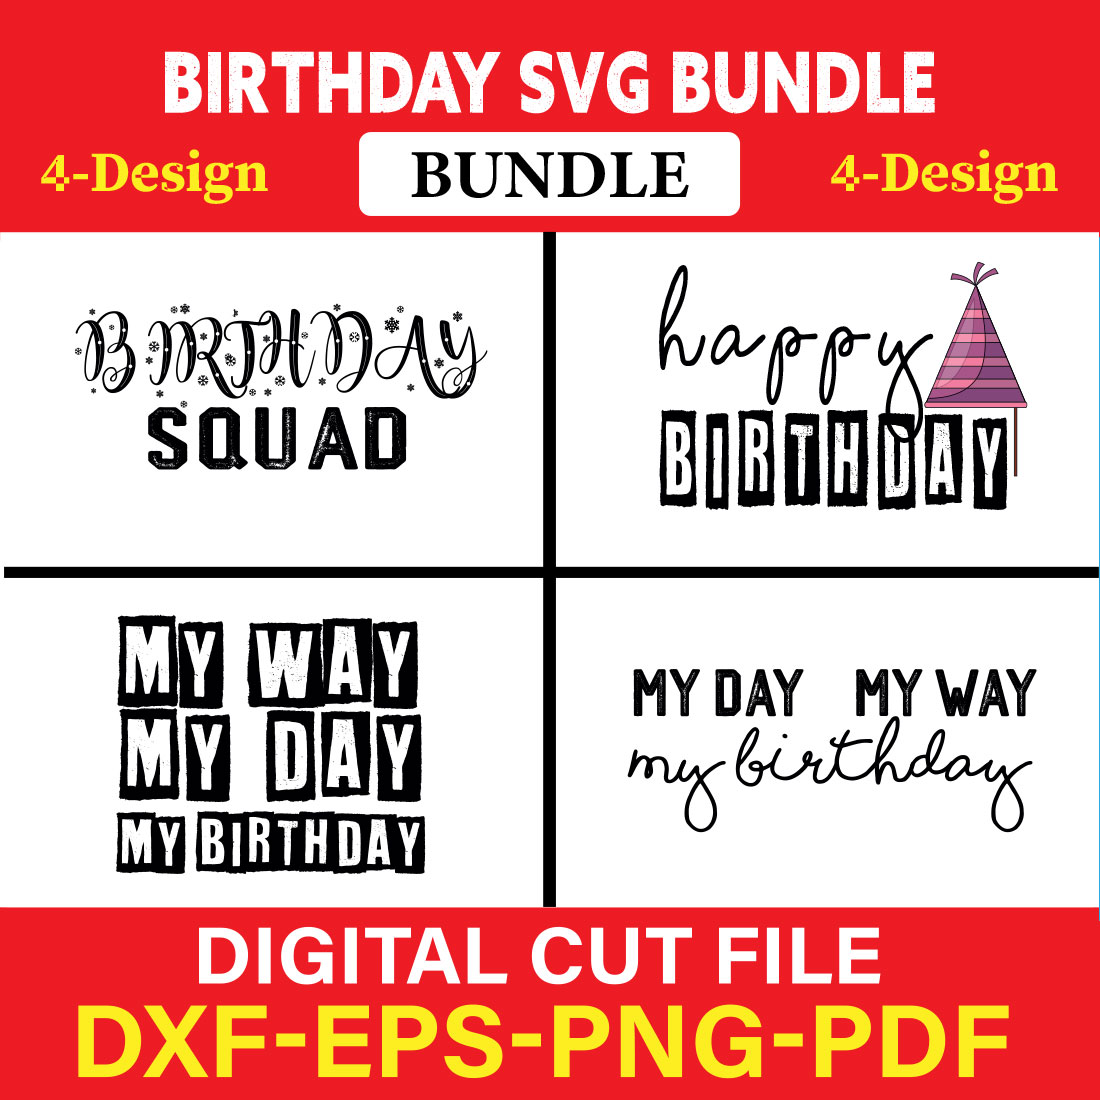 Birthday SVG T-shirt Design Bundle Vol-22 cover image.